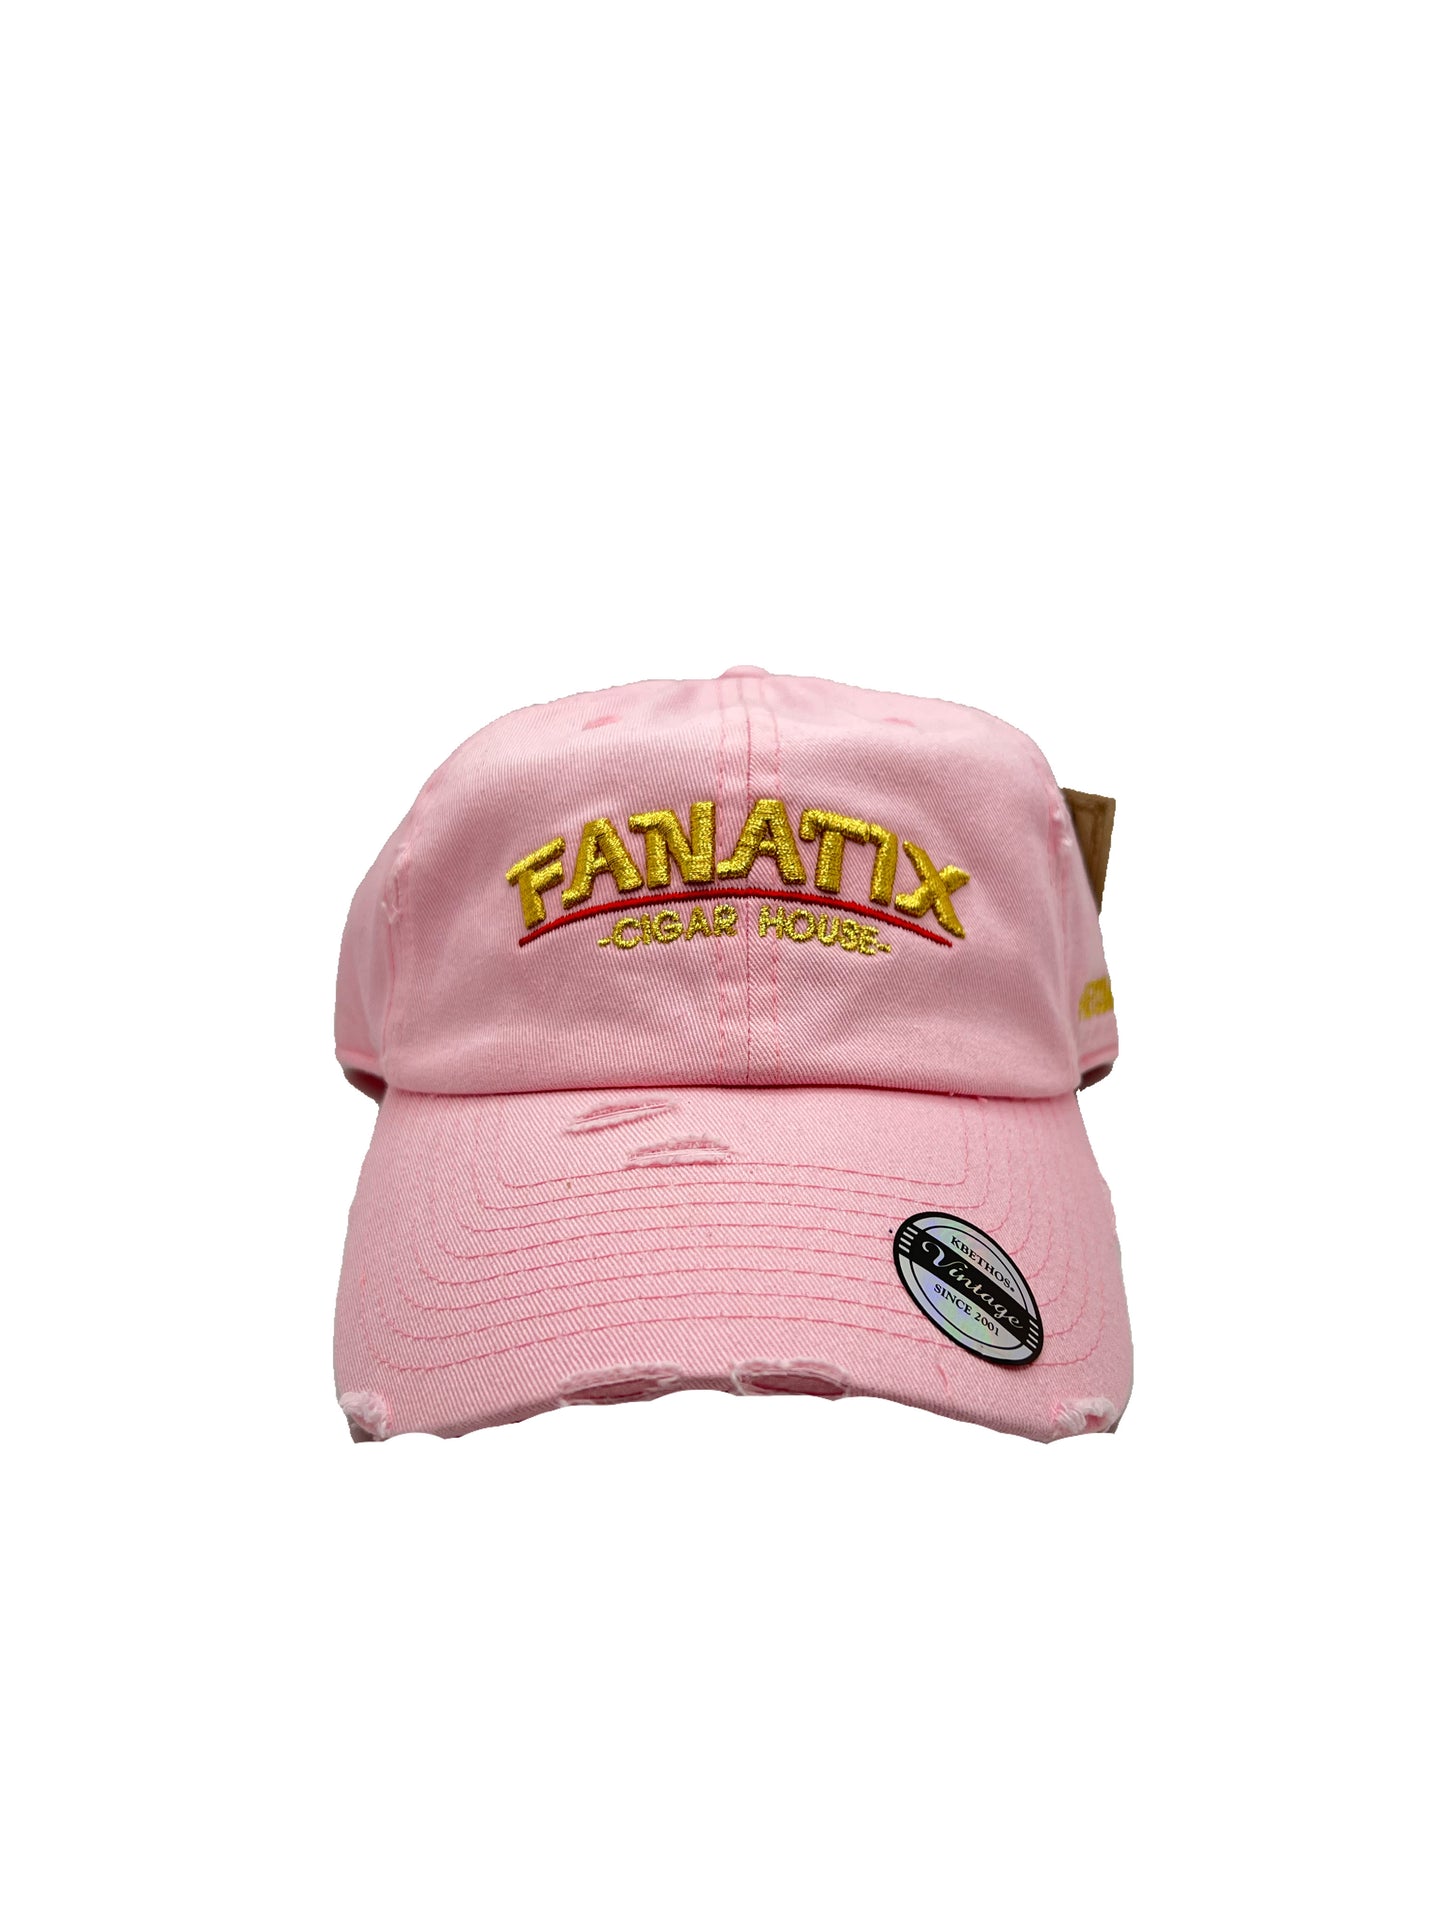 Fanatix Cigar House Dad Hat - Pink